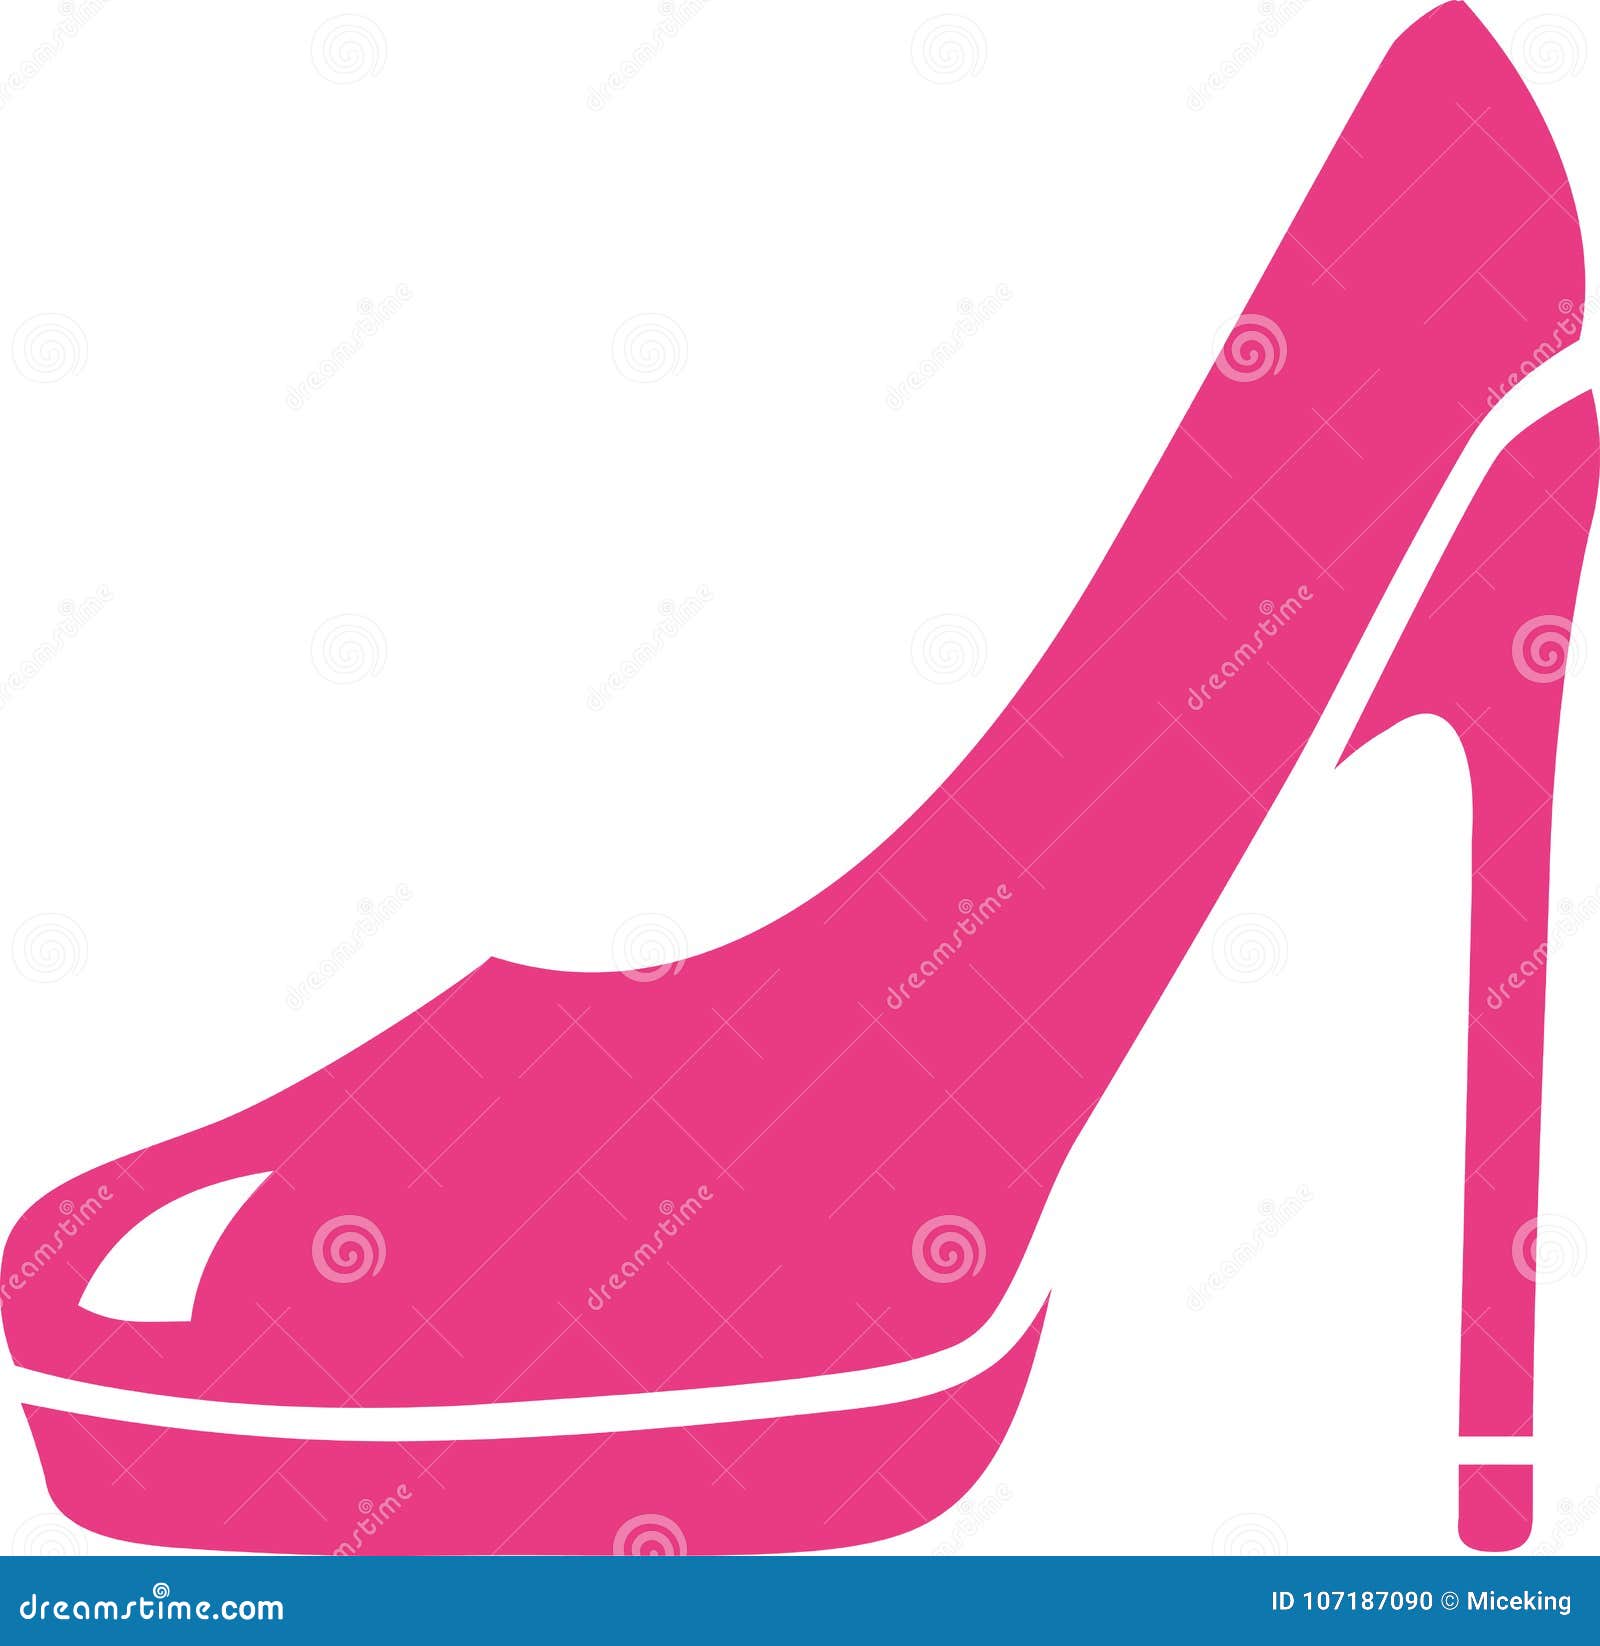 high heels with platform